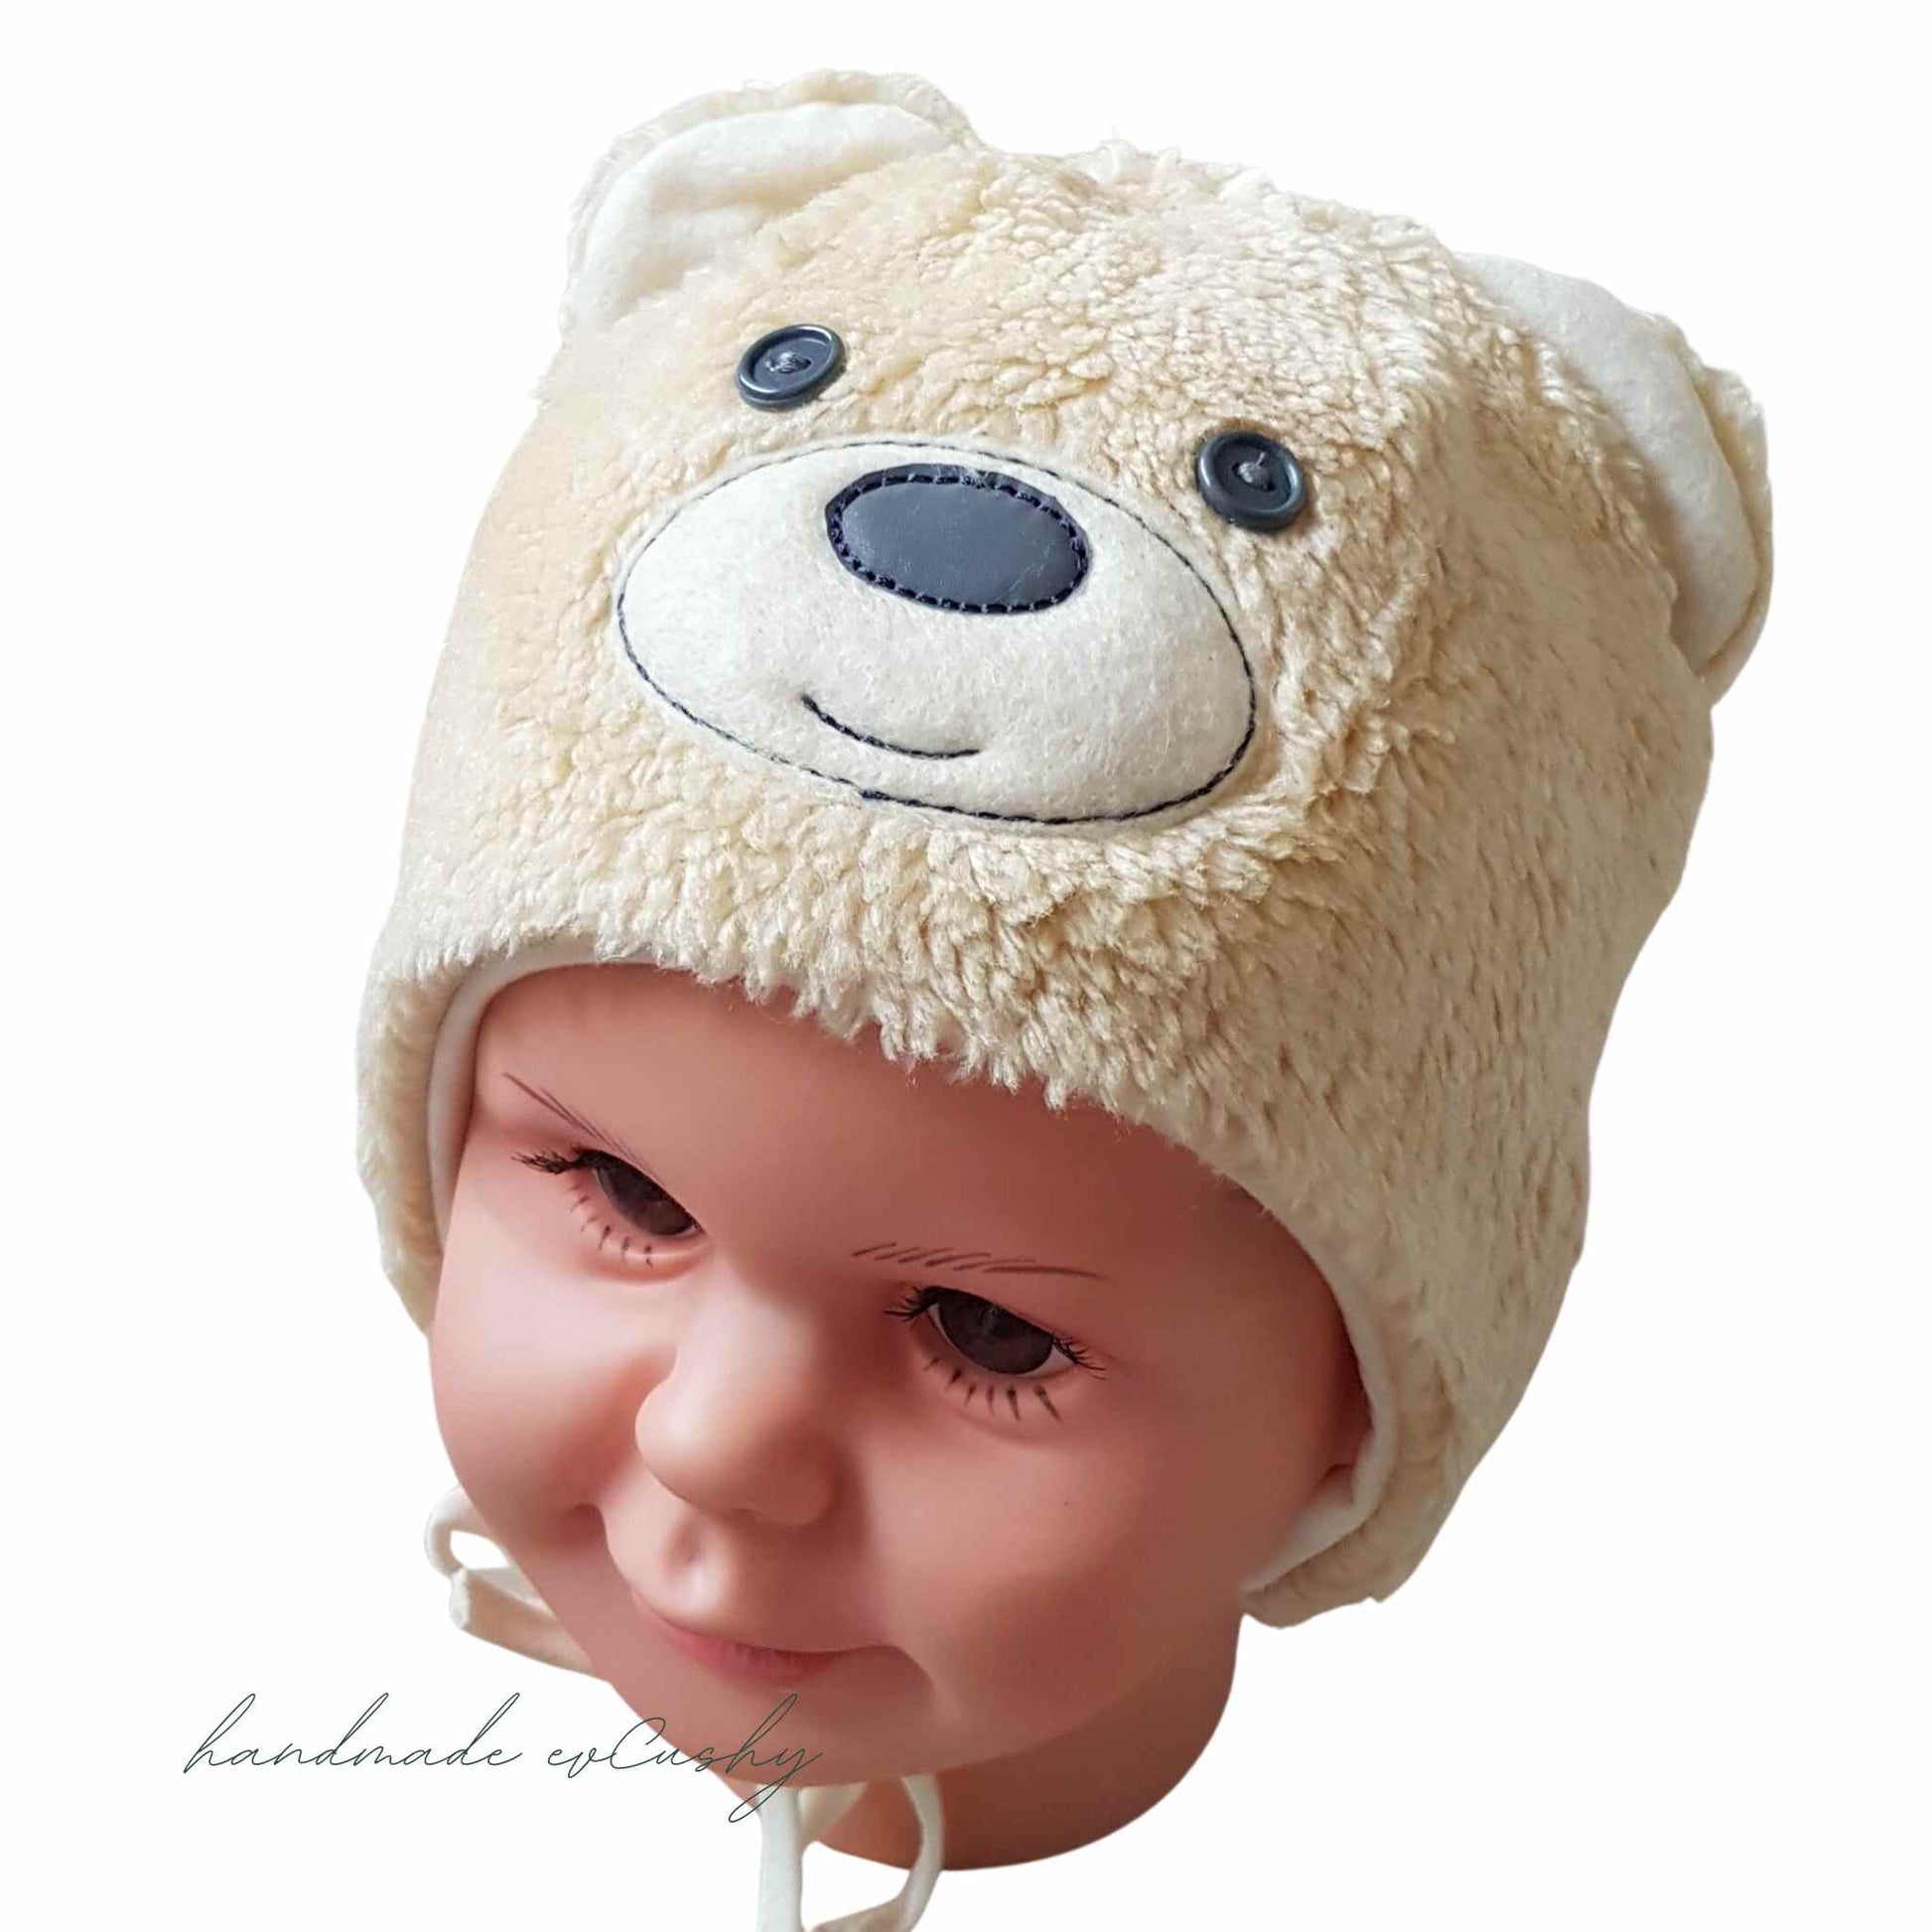 evcushy baby hat for winter warm polar hat bonnet teddy bear with ears